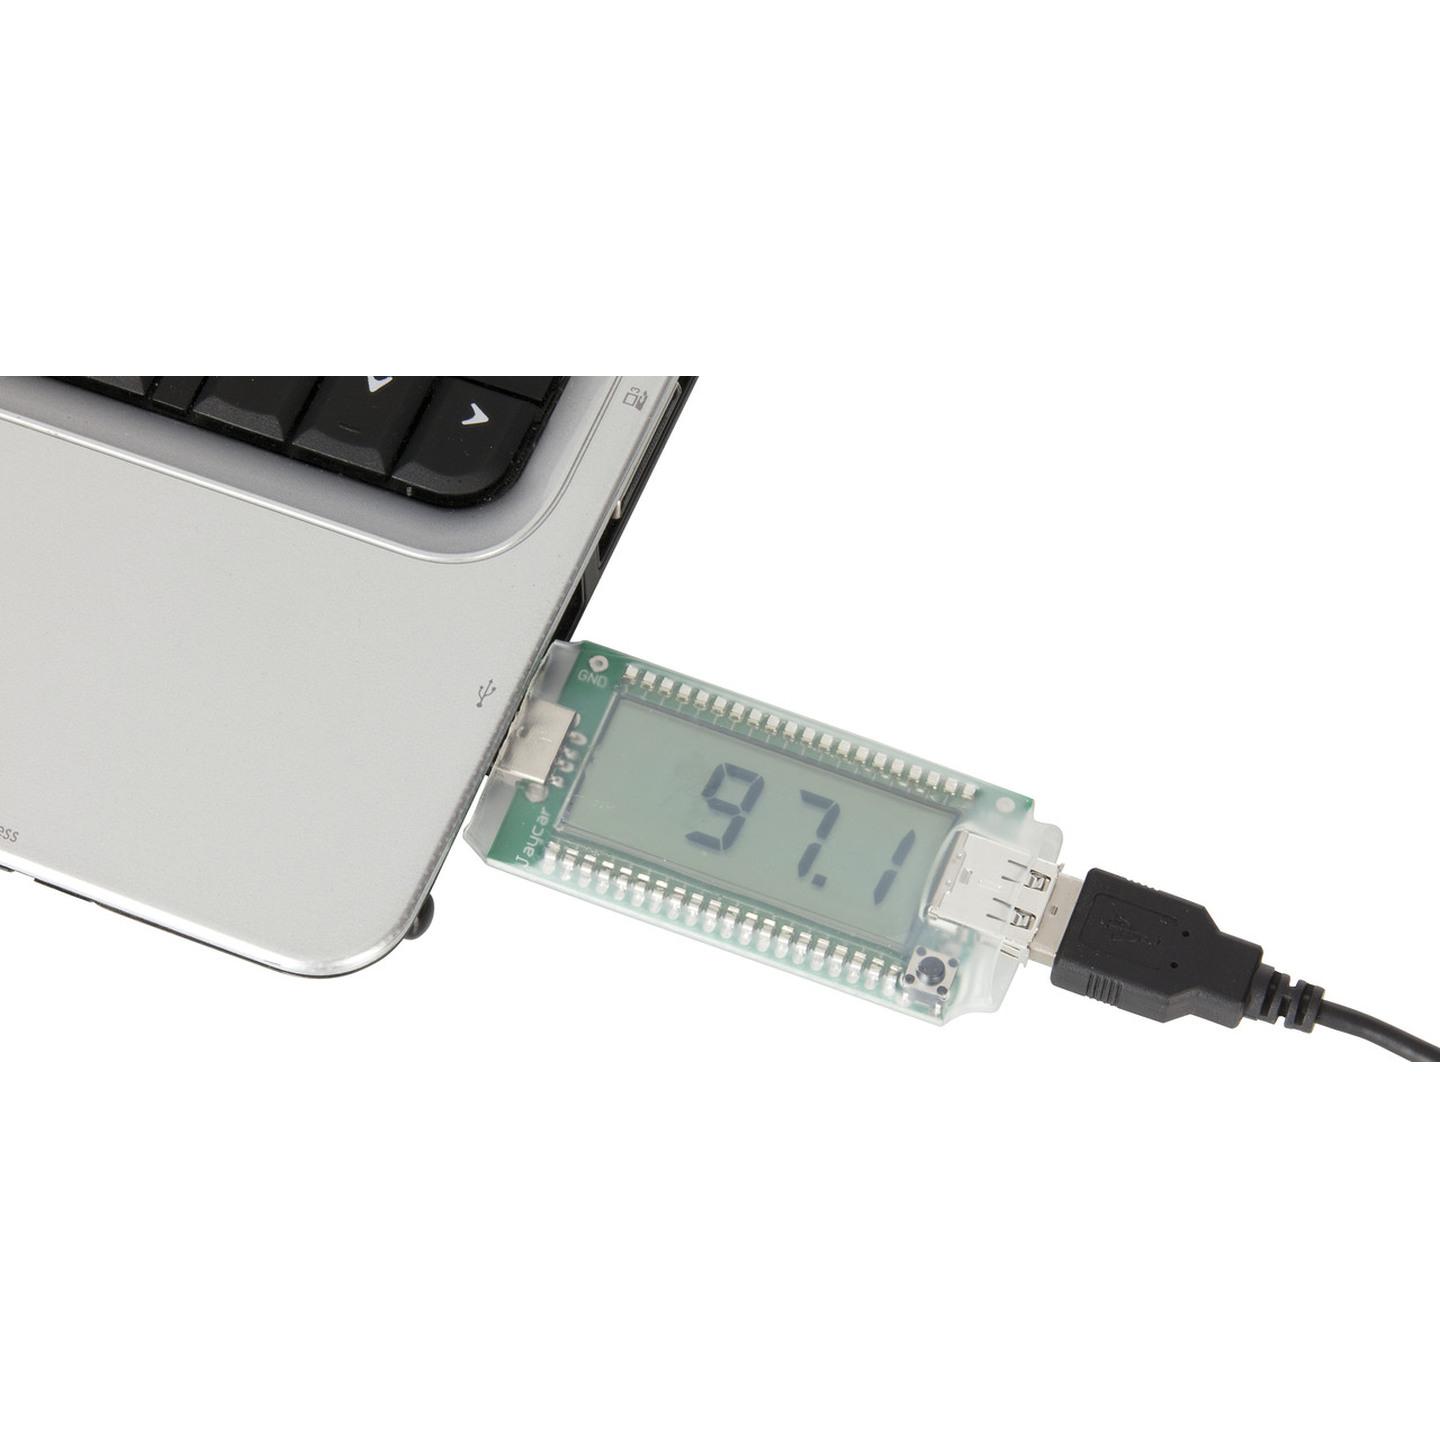 USB Power Monitor Kit